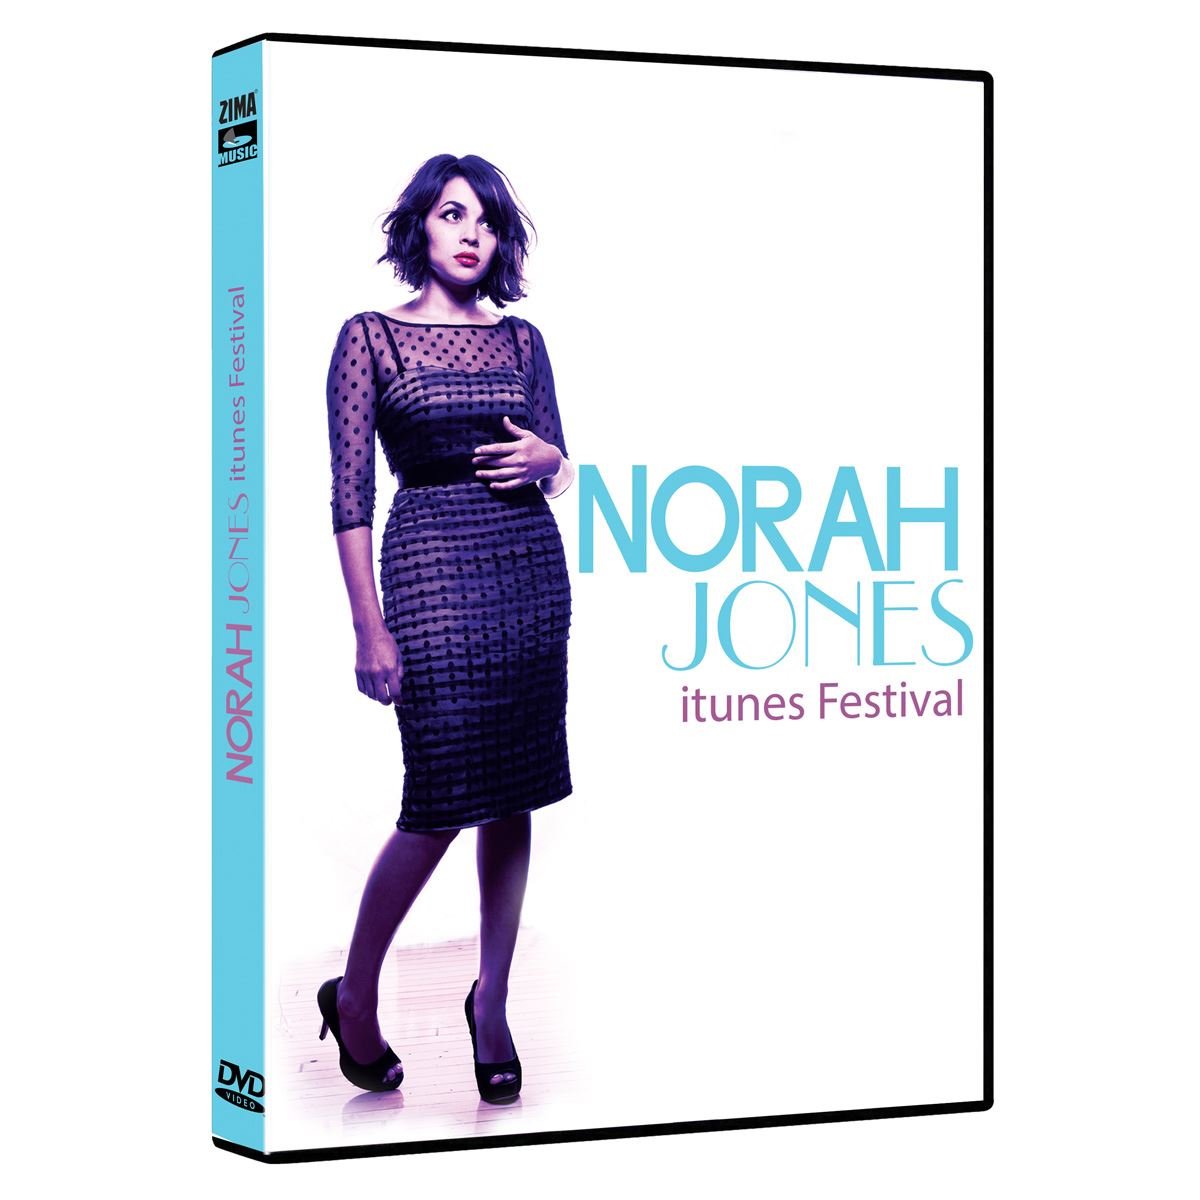 Norah Jones Itunes Festival